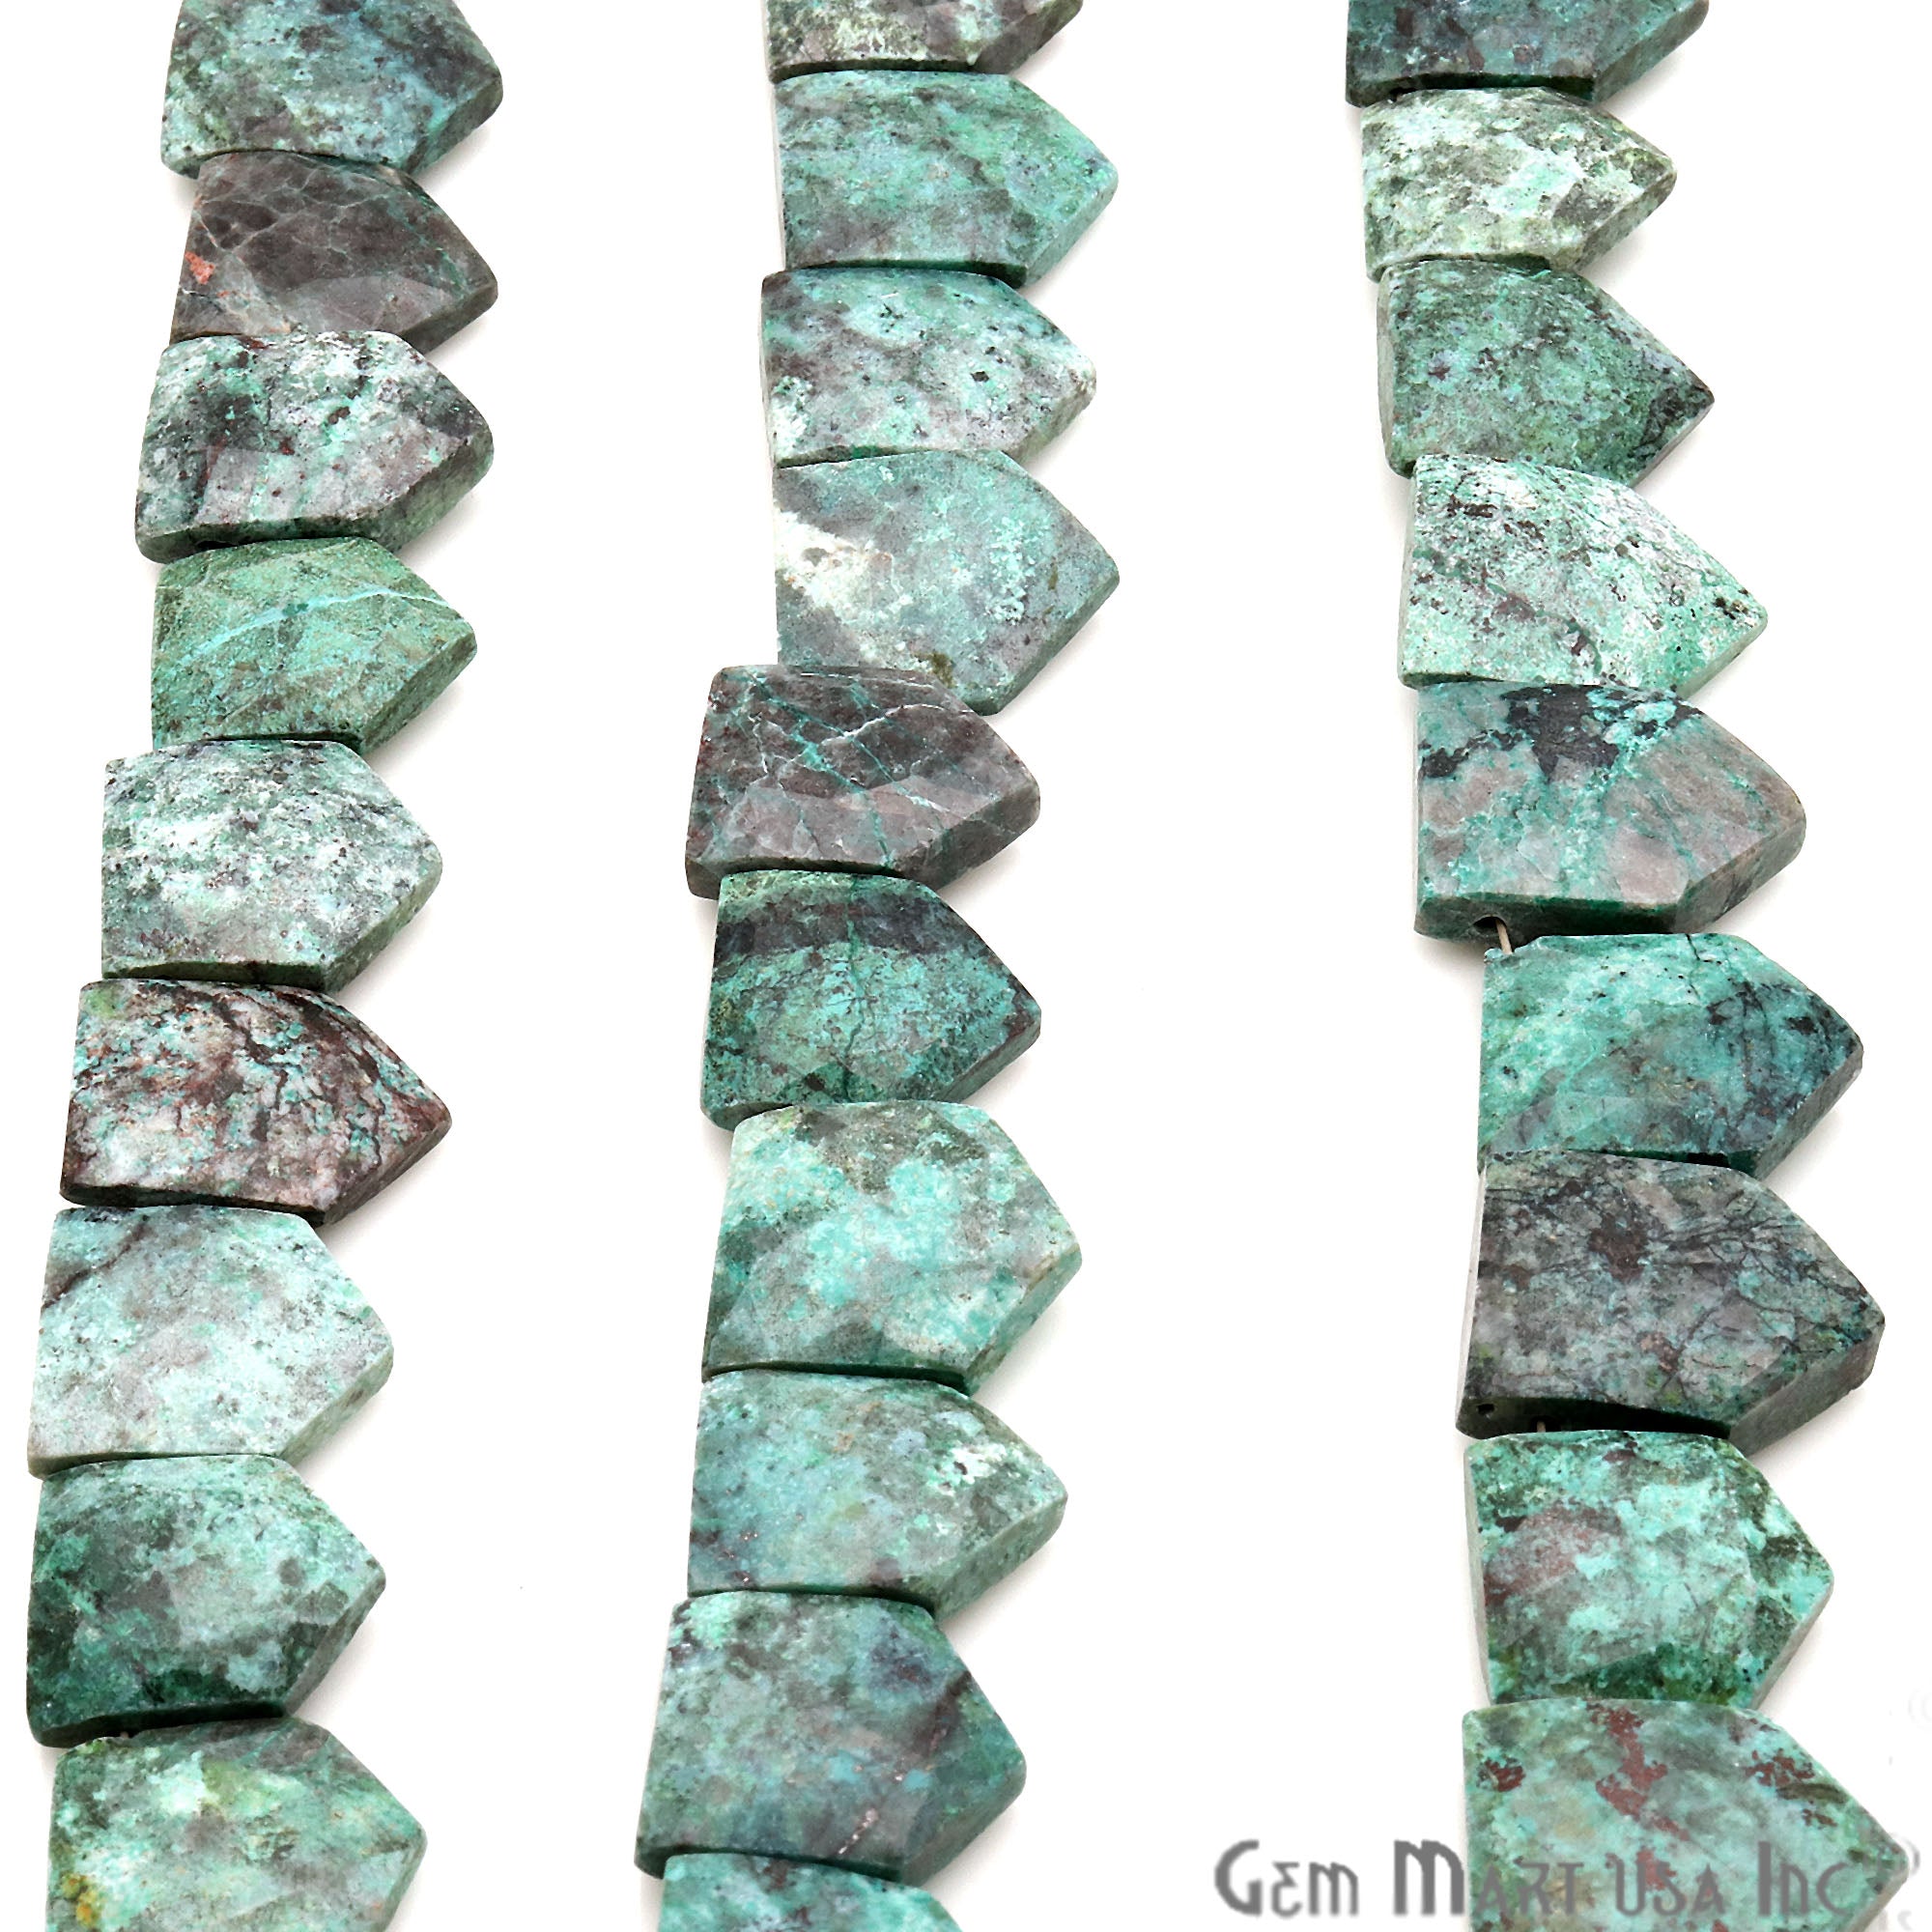 African Turquoise Pentagon 19x13mm Crafting Beads Gemstone Briolette Strands 8 Inch - GemMartUSA